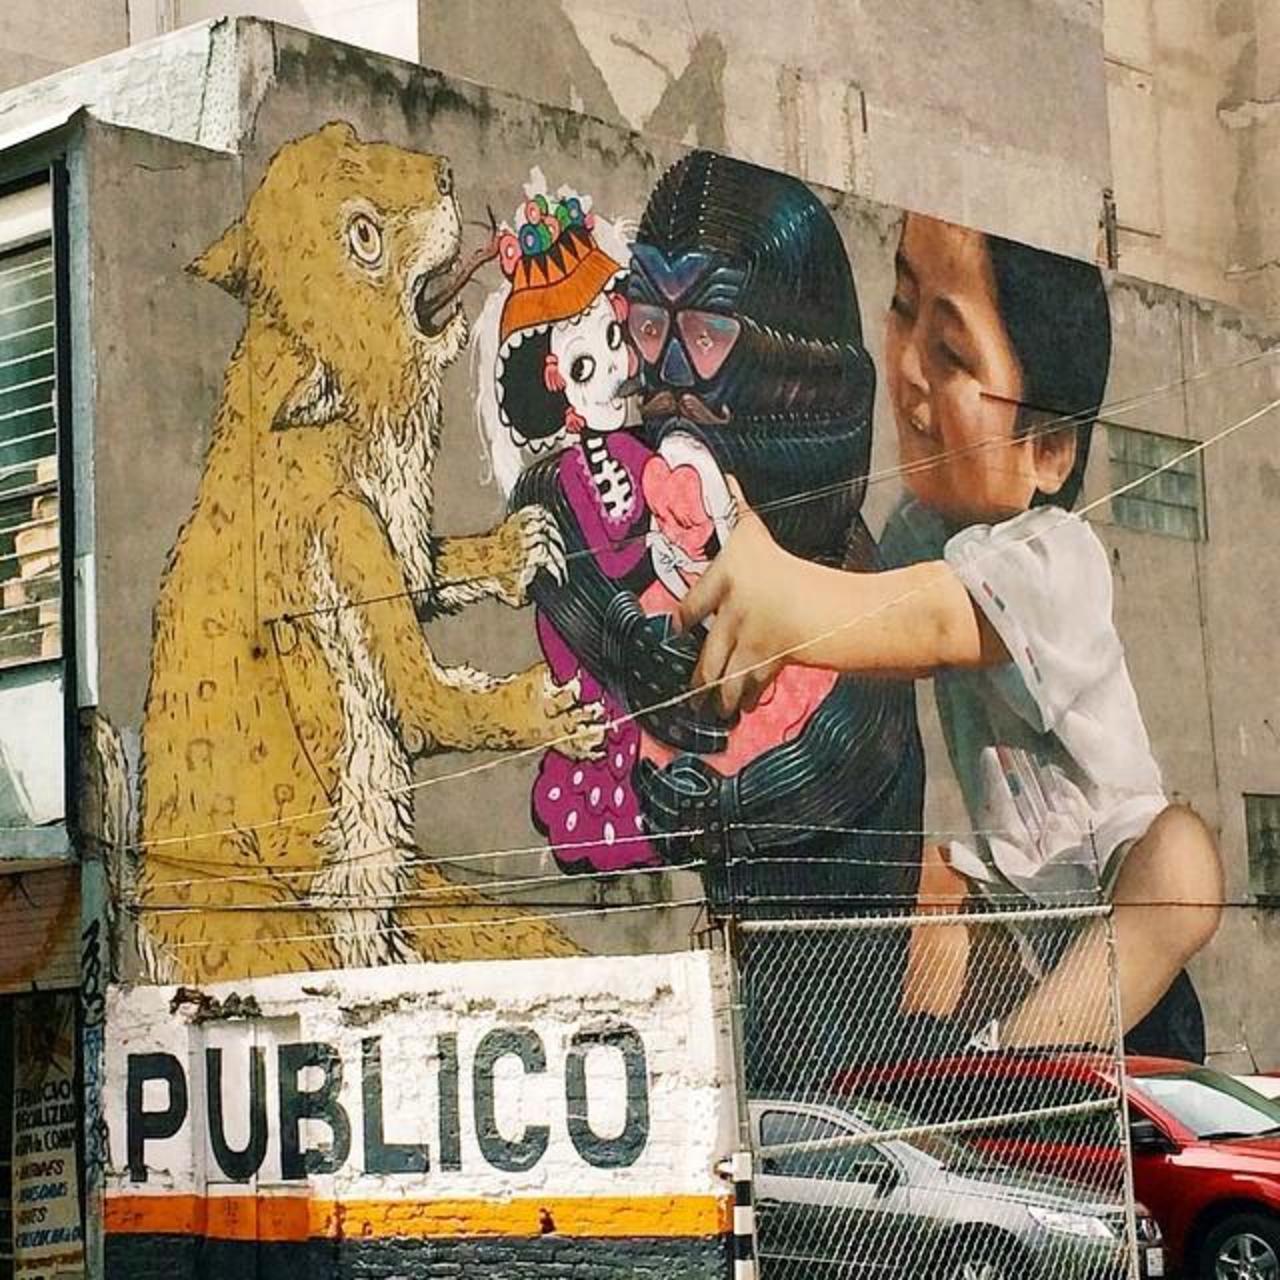 '(I said) Do you wanna piece of me?' #streetart #mexicocity #mexico #art #graffiti #mexicana #urban #instatravel ... http://t.co/7LpBlMPGjj